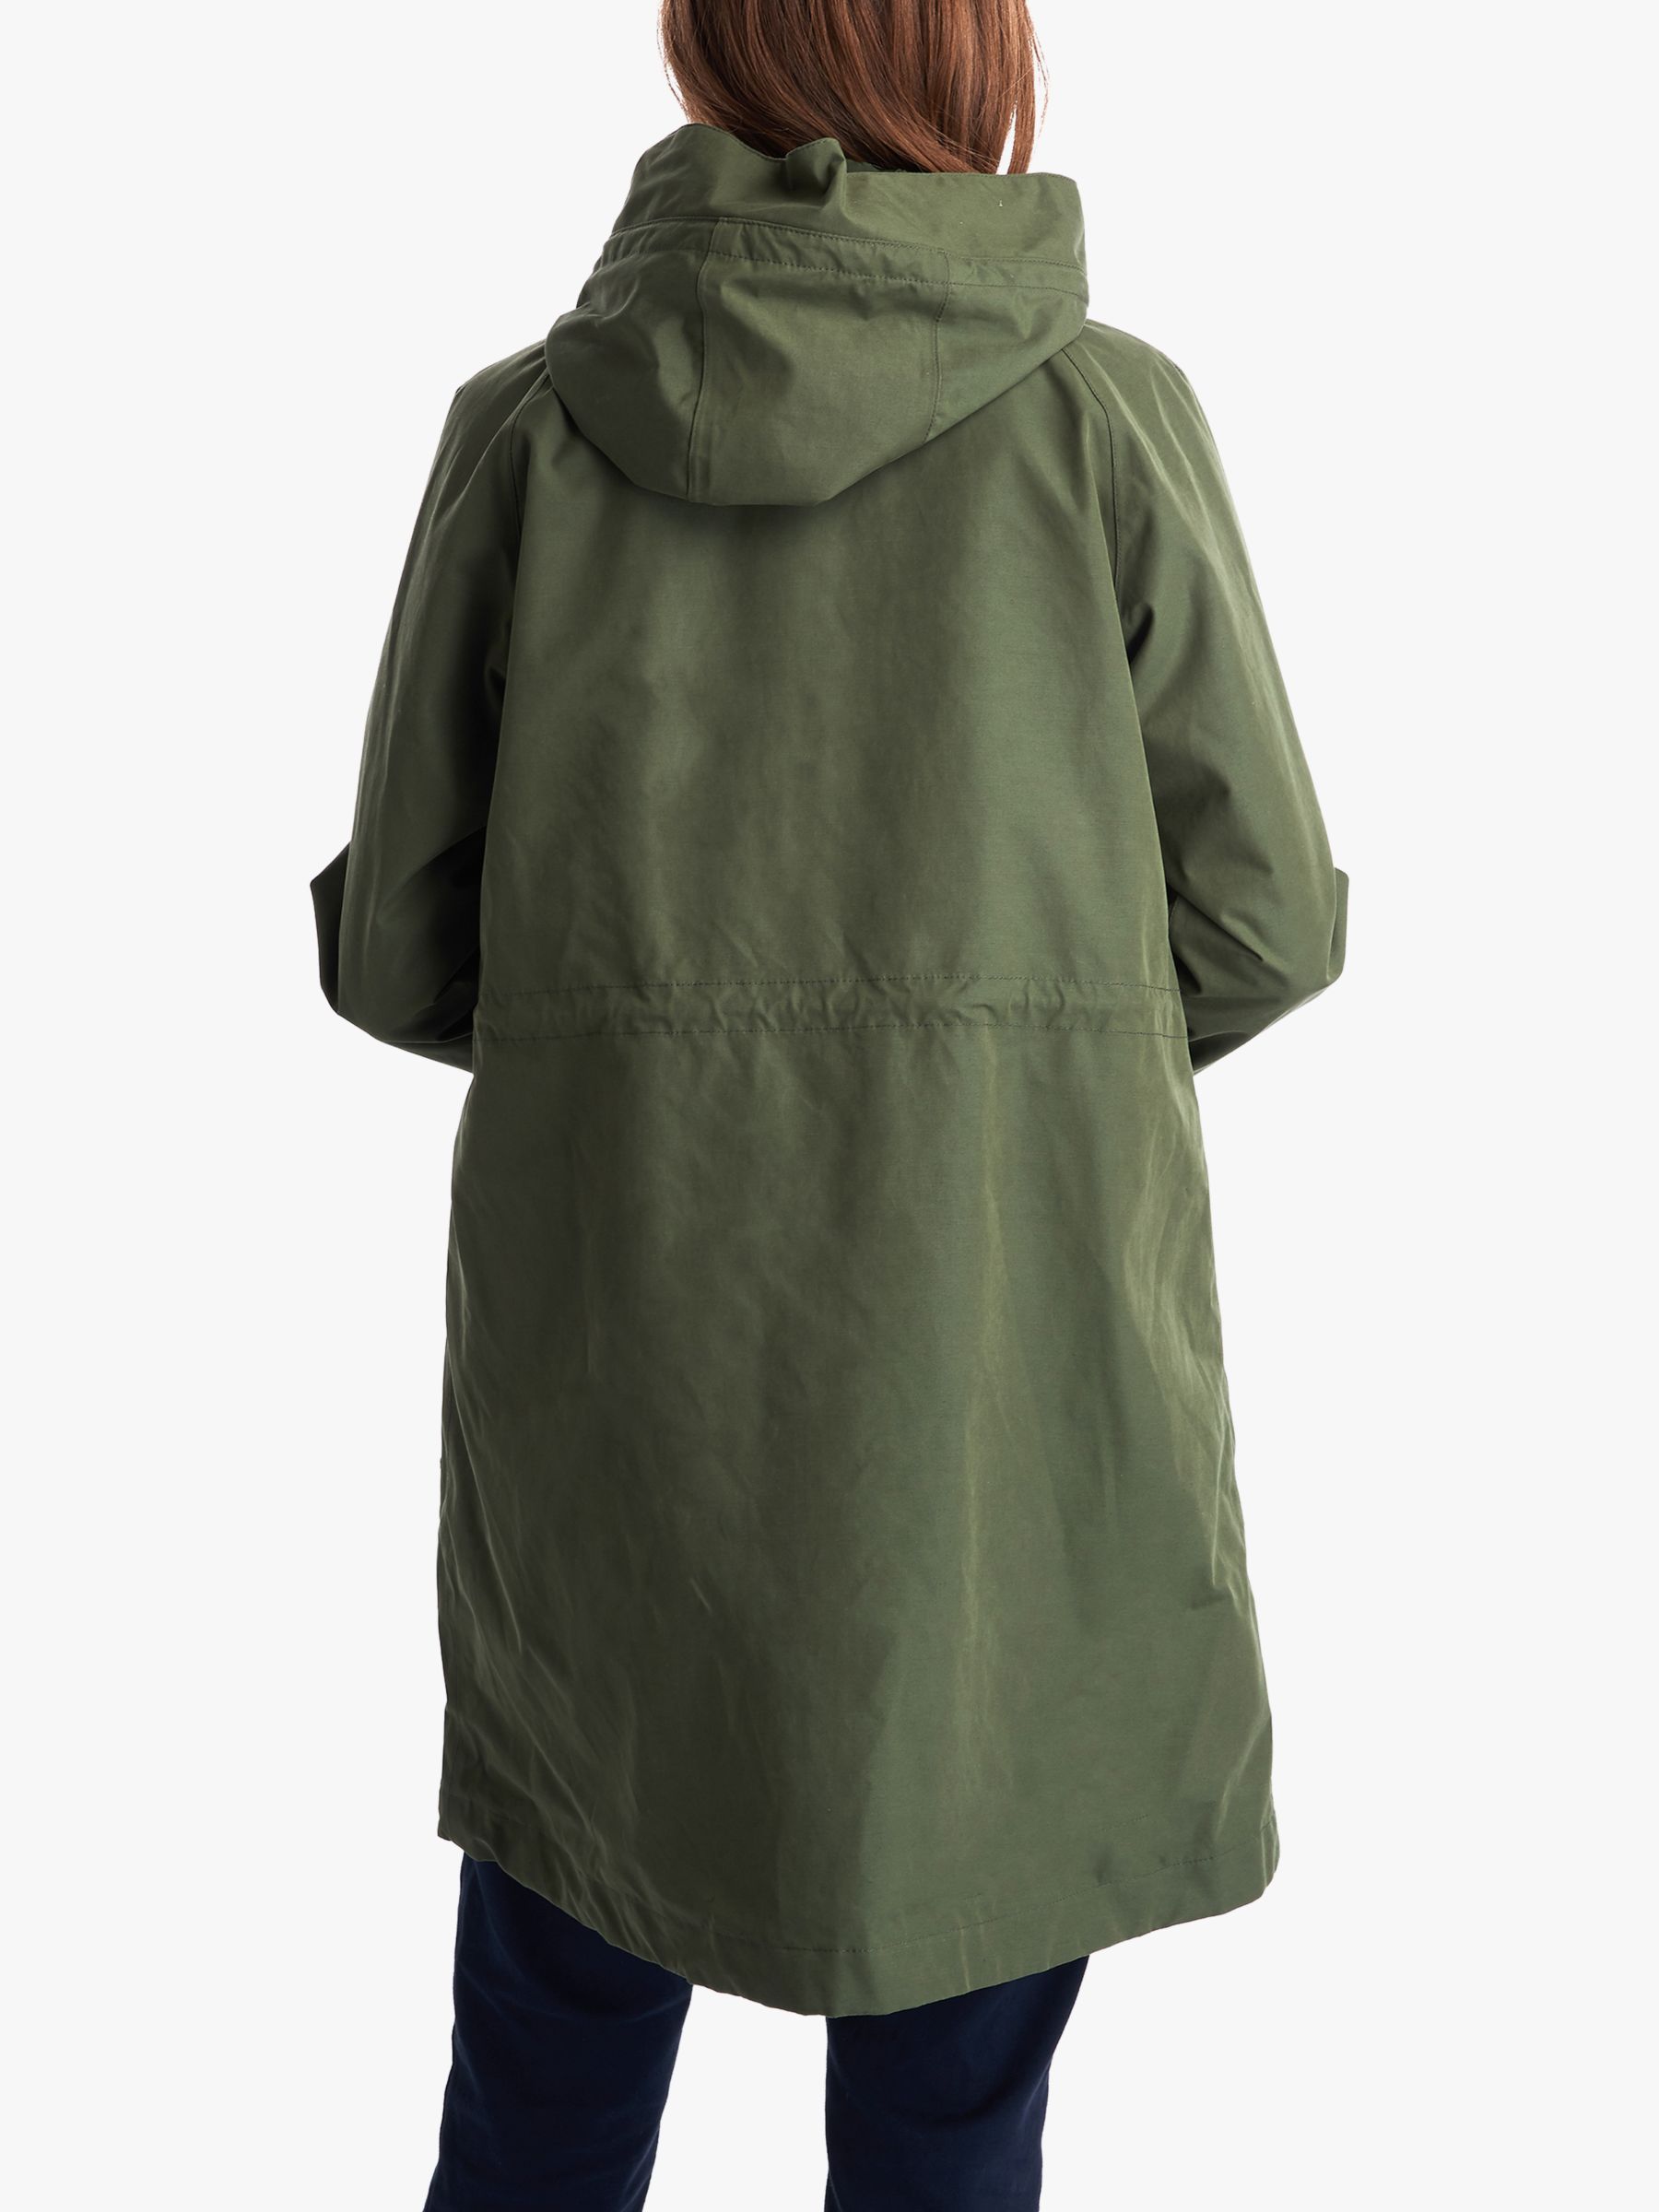 Barbour Subtropic Waterproof Jacket at 